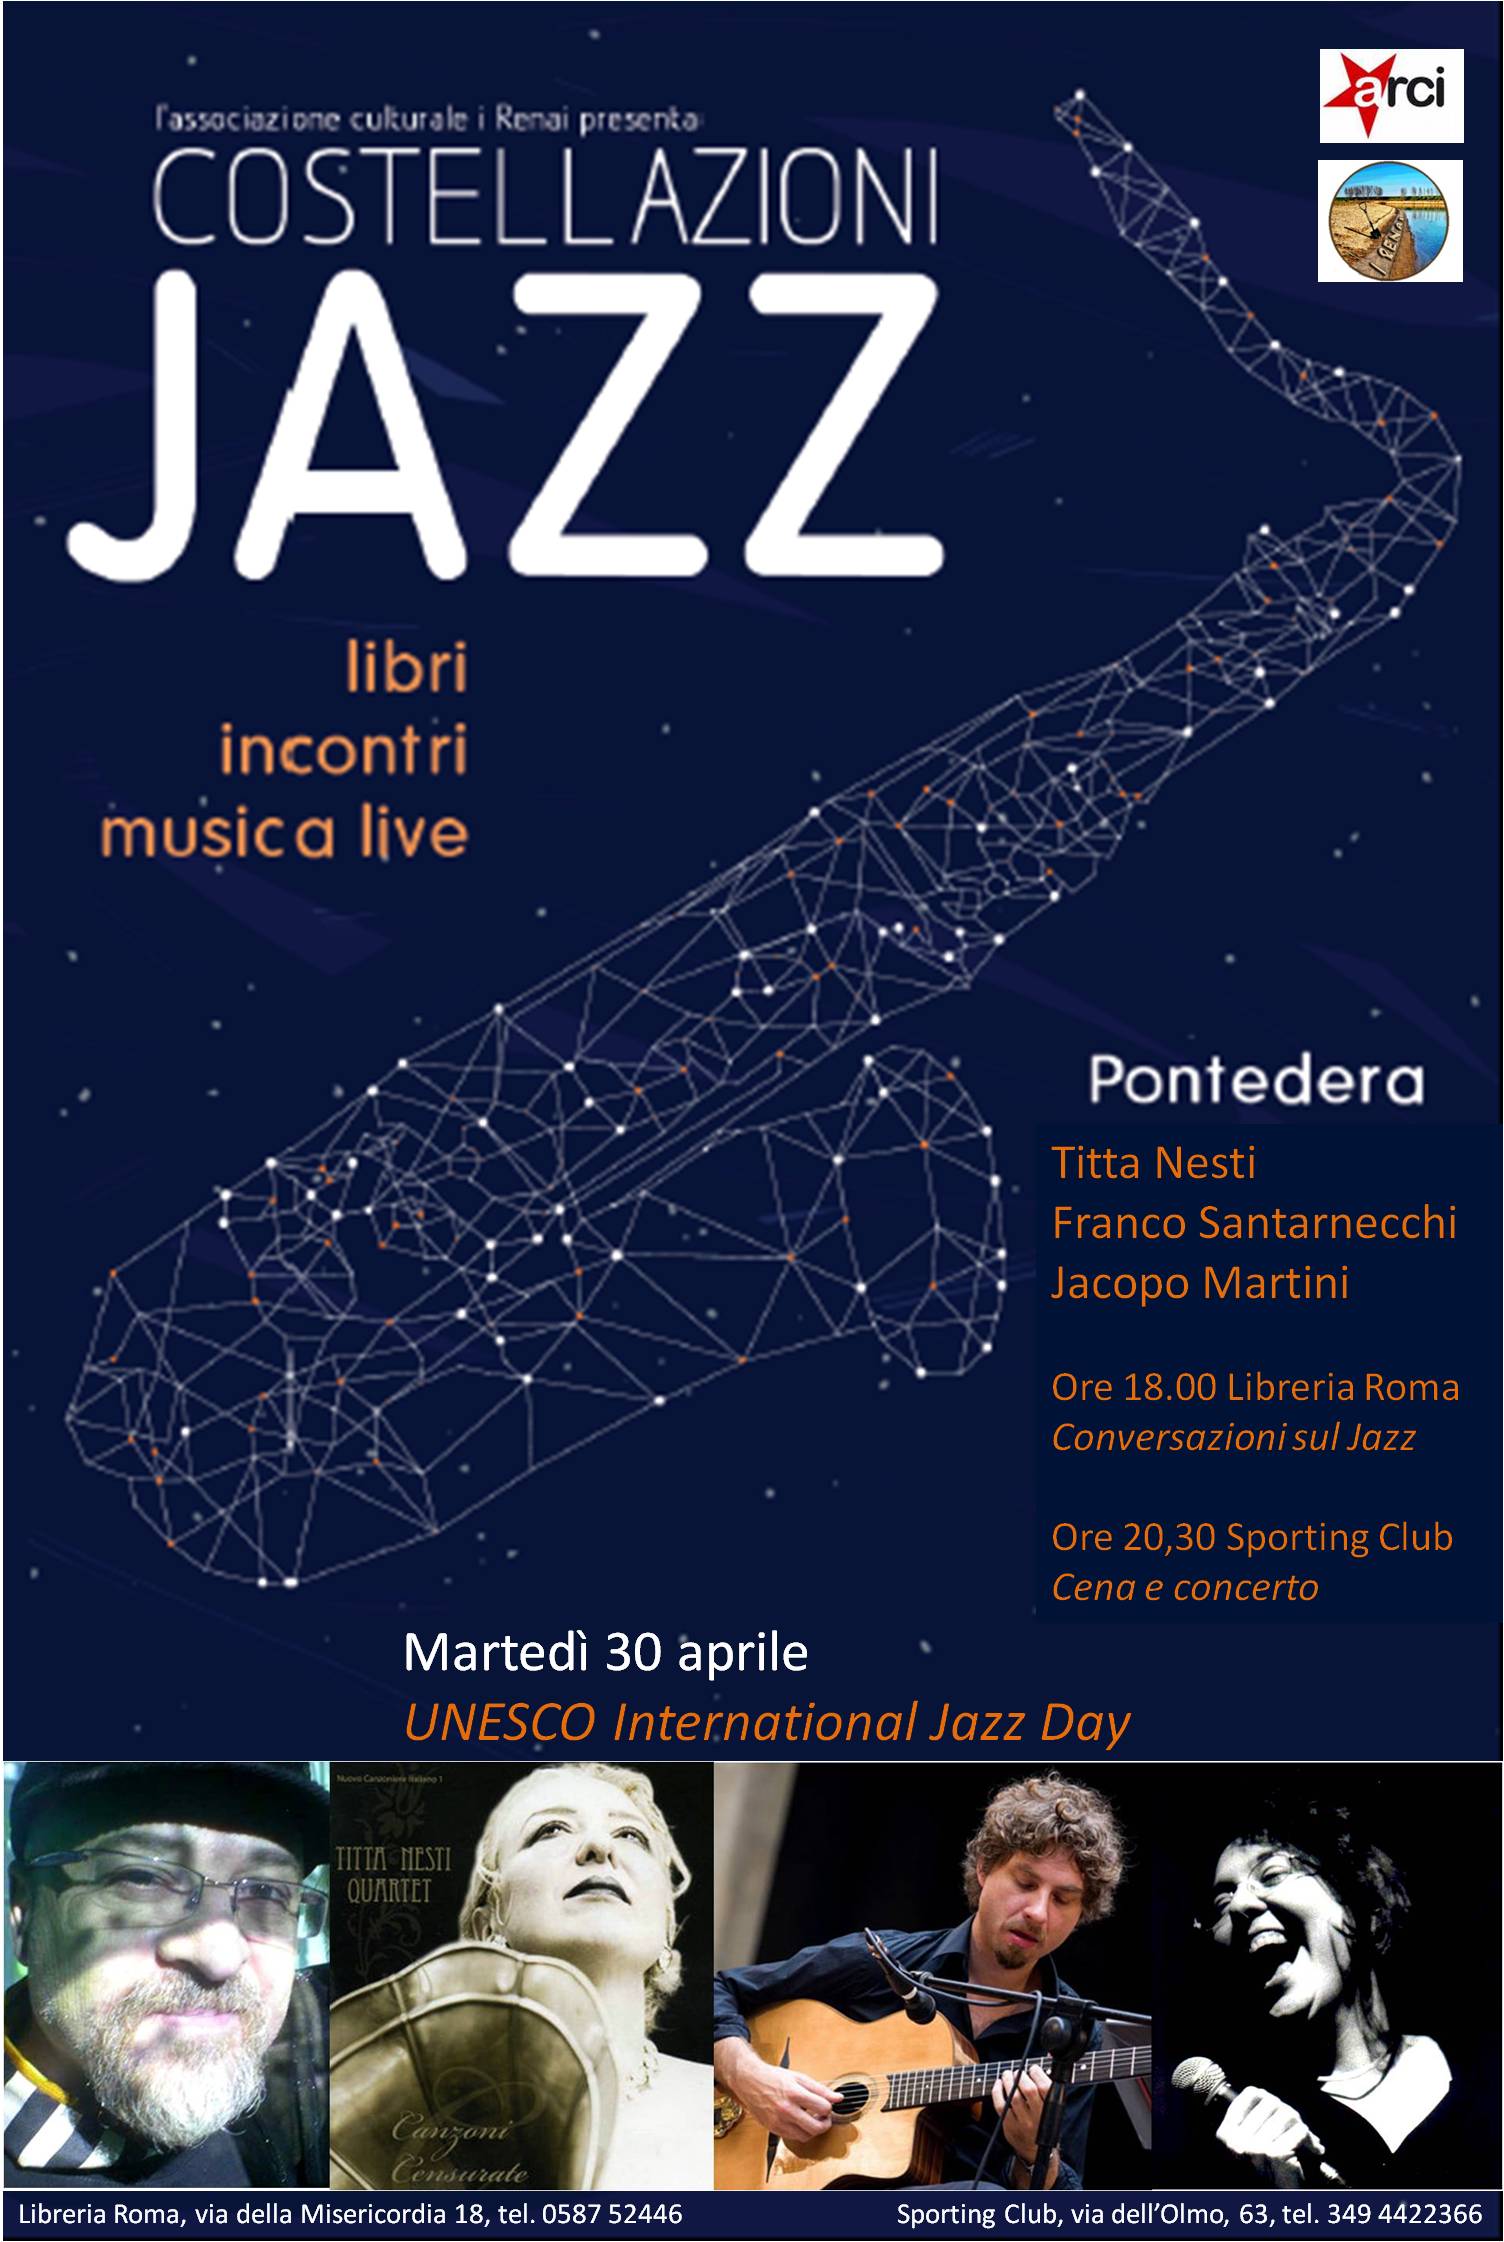 Pontedera_UNESCO International Jazz Day